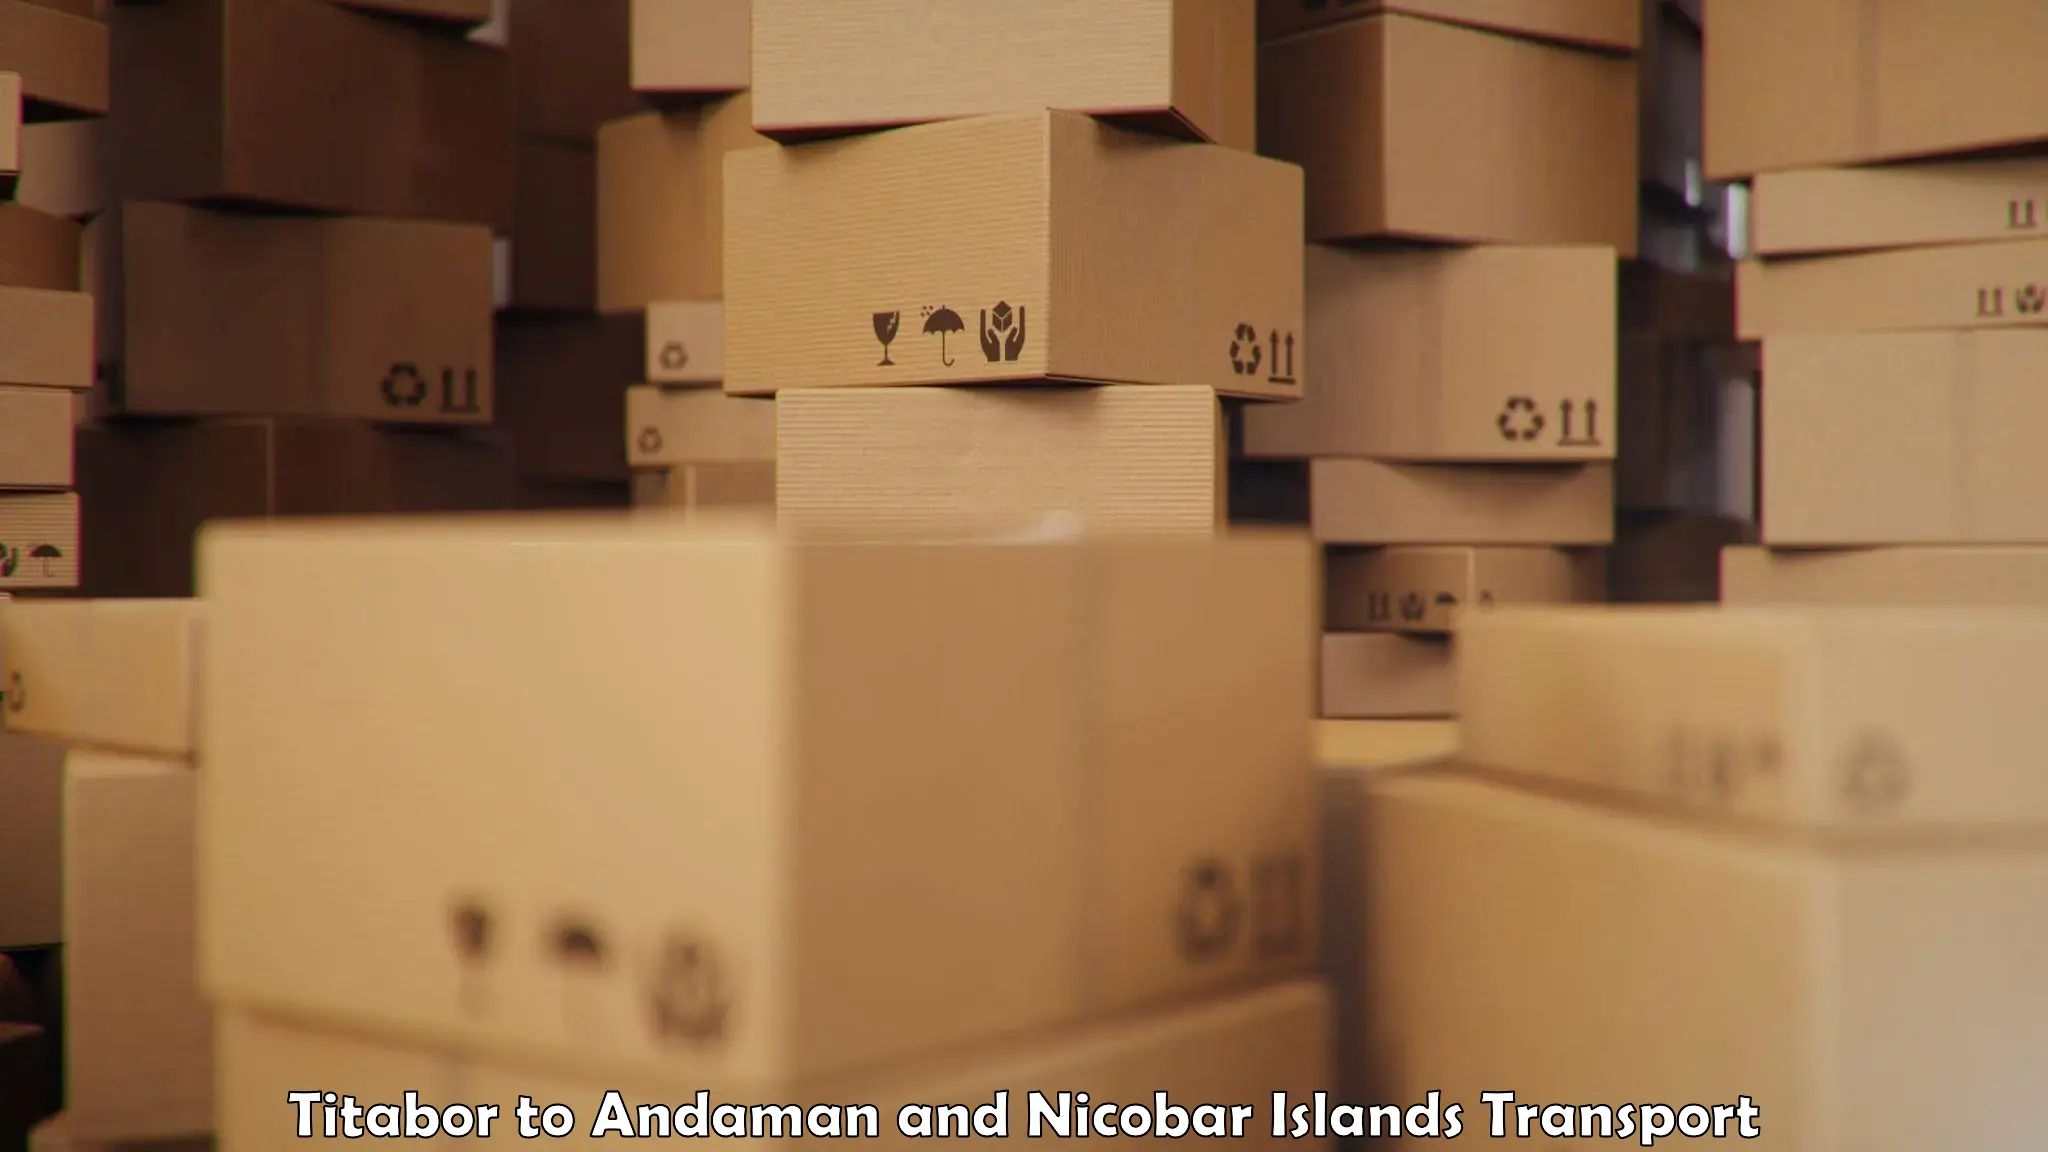 Shipping partner Titabor to South Andaman